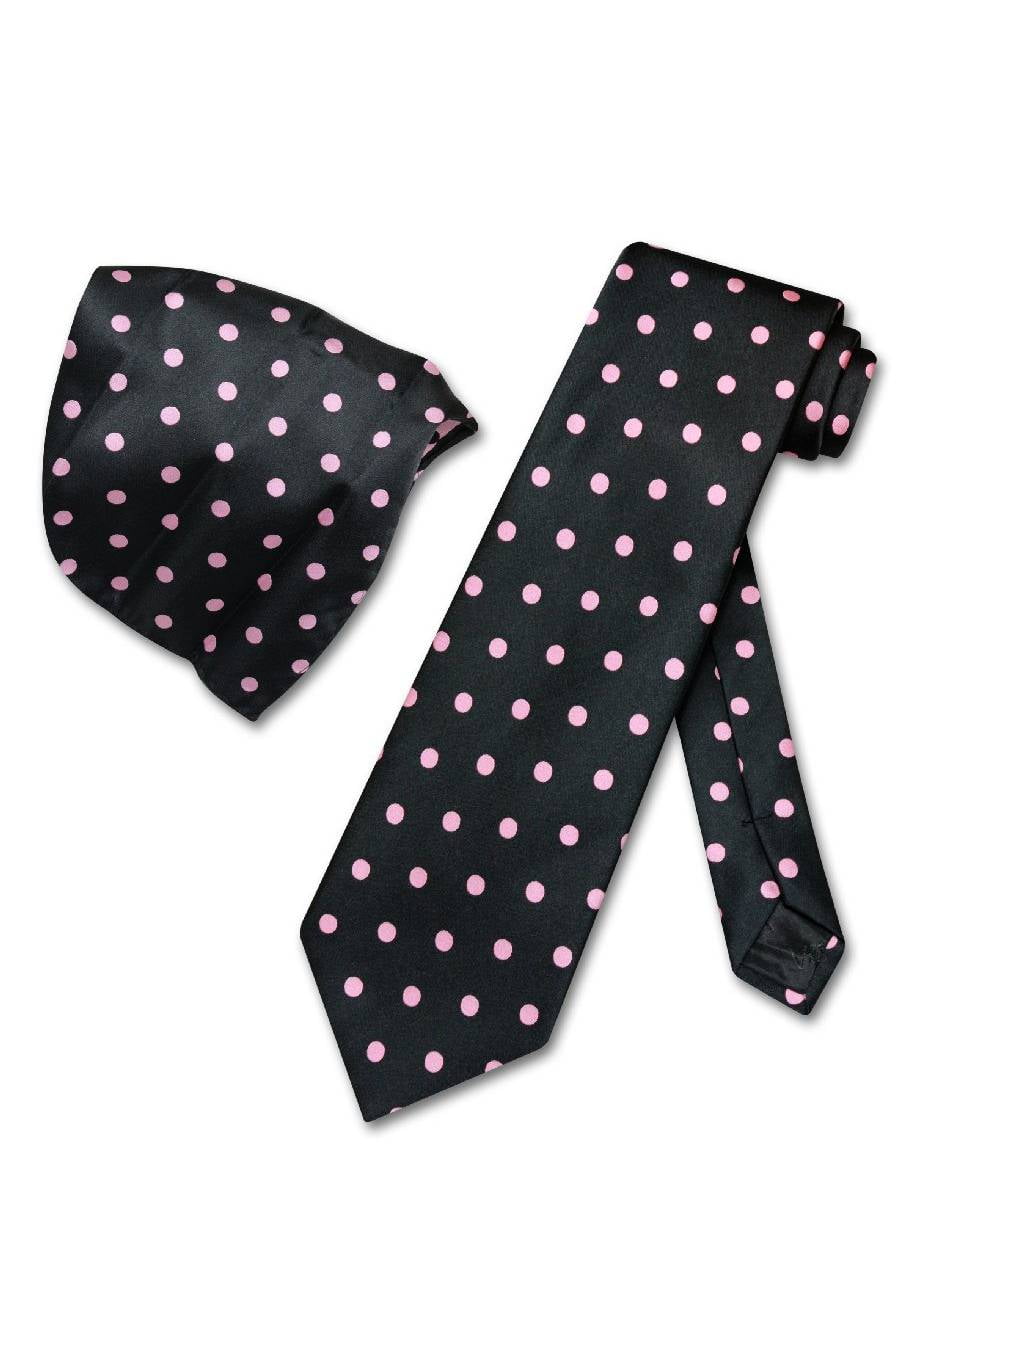 Vesuvio Napoli NeckTie WHITE with BLACK Polka Dots Design Mens Neck Tie